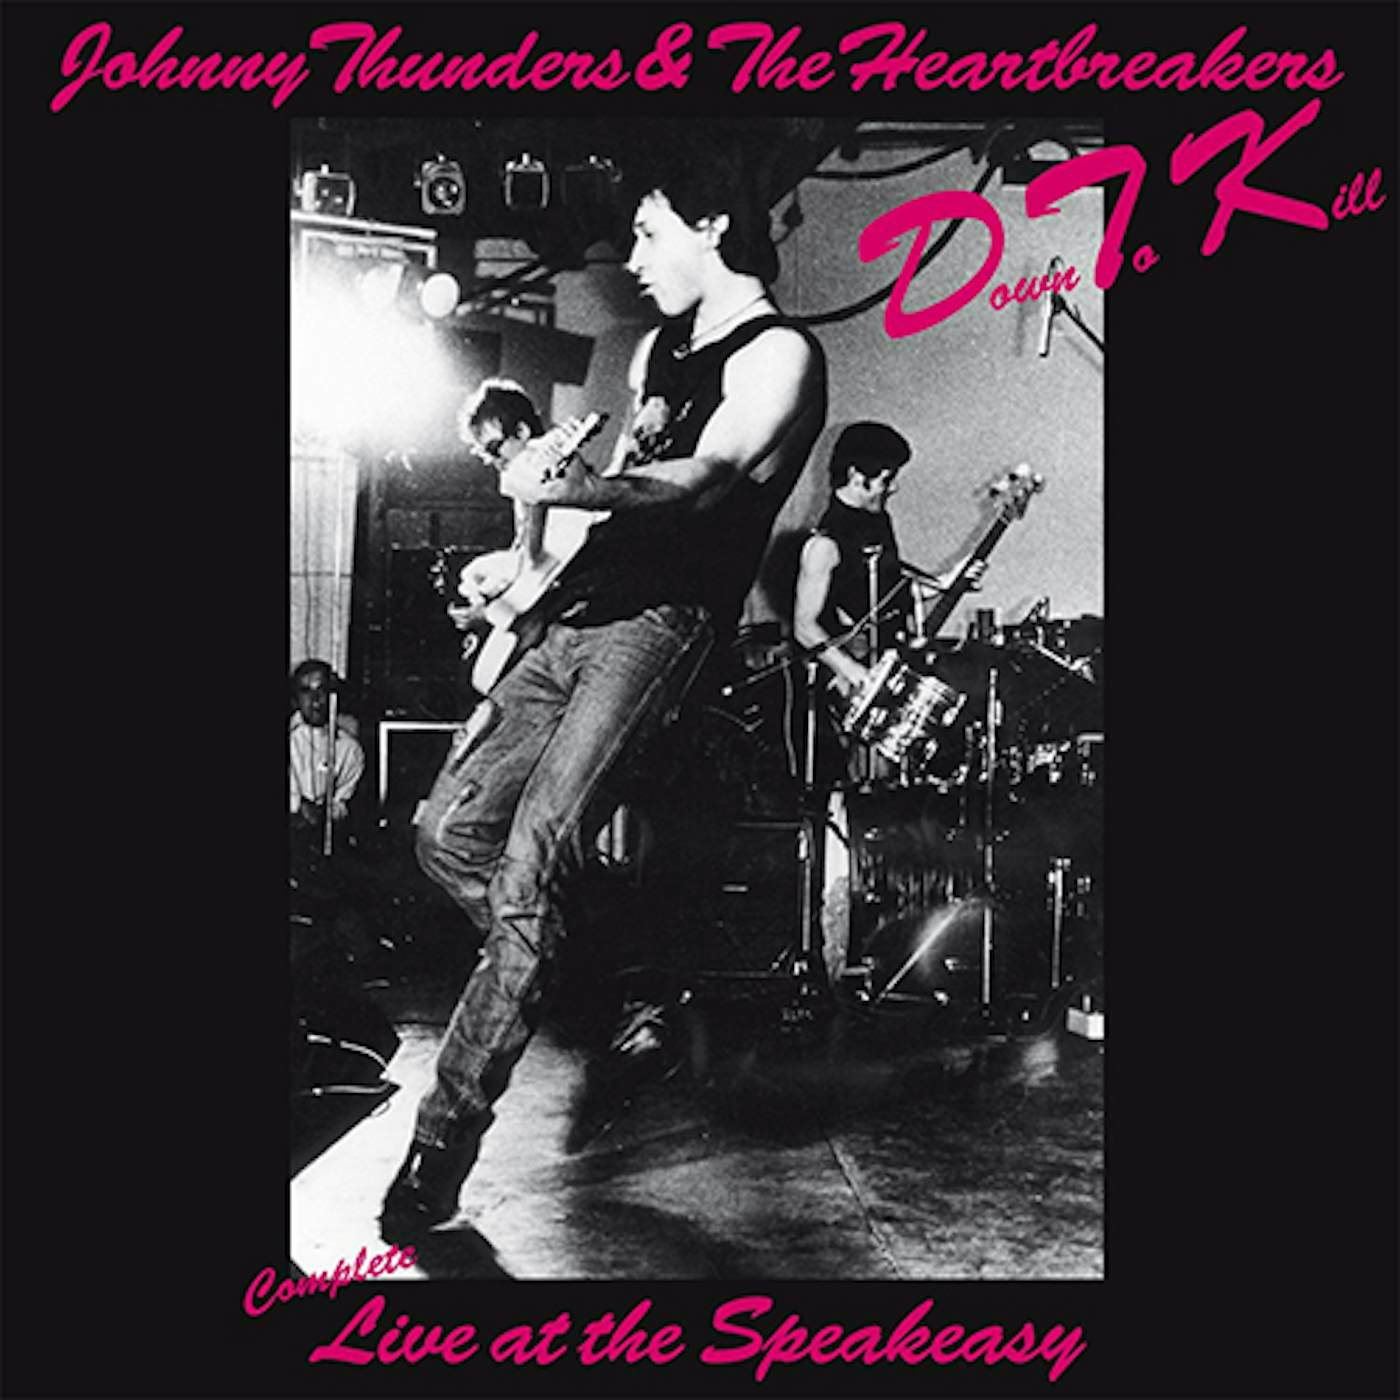 Johnny Thunders & The Heartbreakers DOWN TO KILL: LIVE AT THE SPEAKEASY Vinyl Record